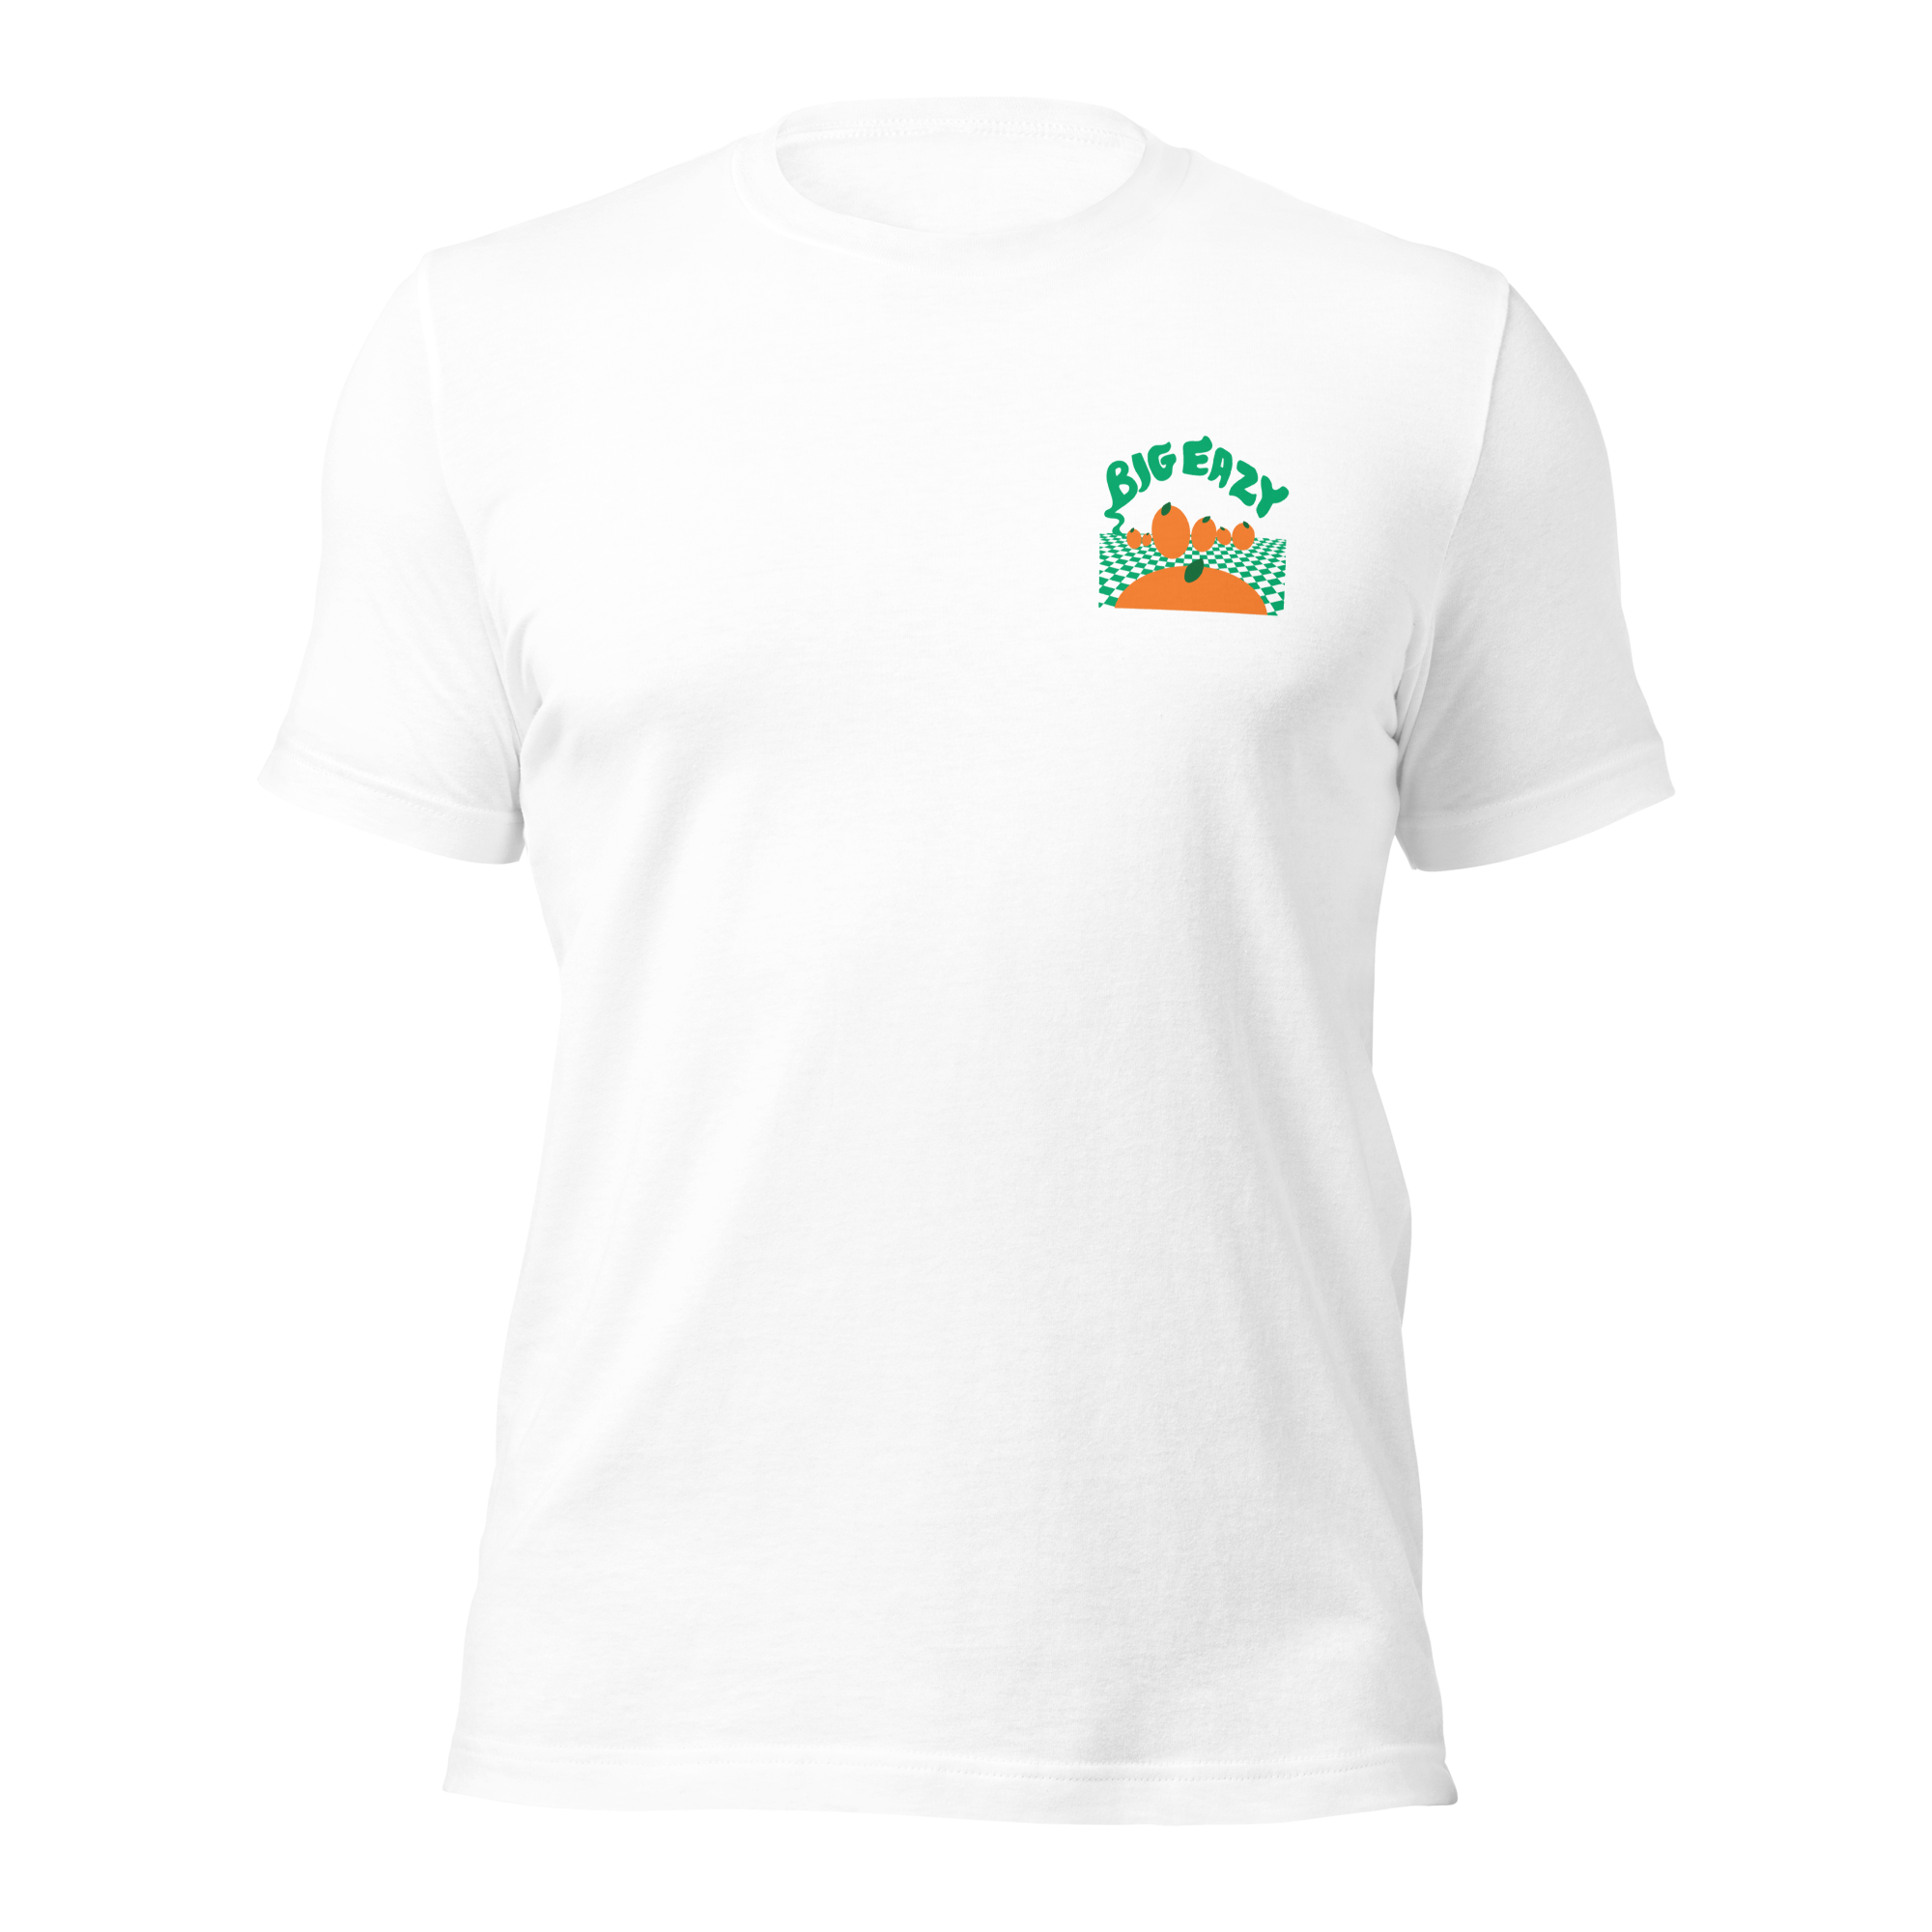 Marmalade Pie - T-Shirts